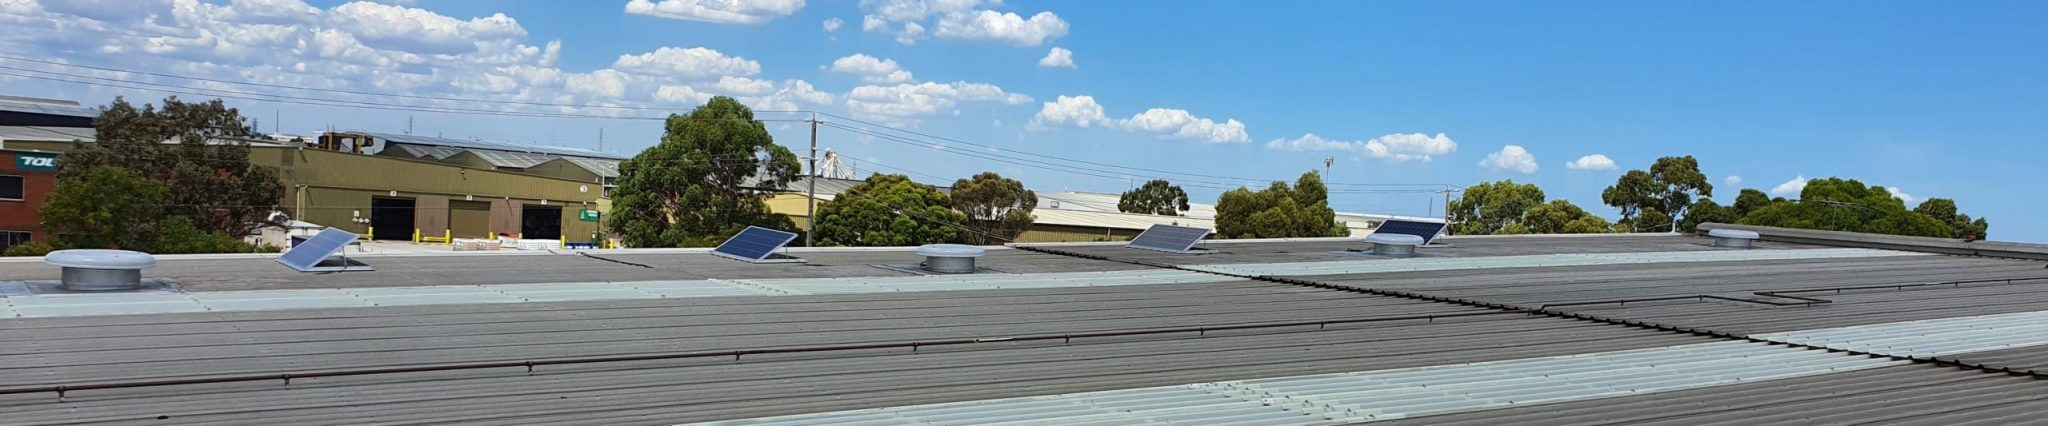 Solar Whiz commercial installation on Steel Fabrication - North Laverton Victoria